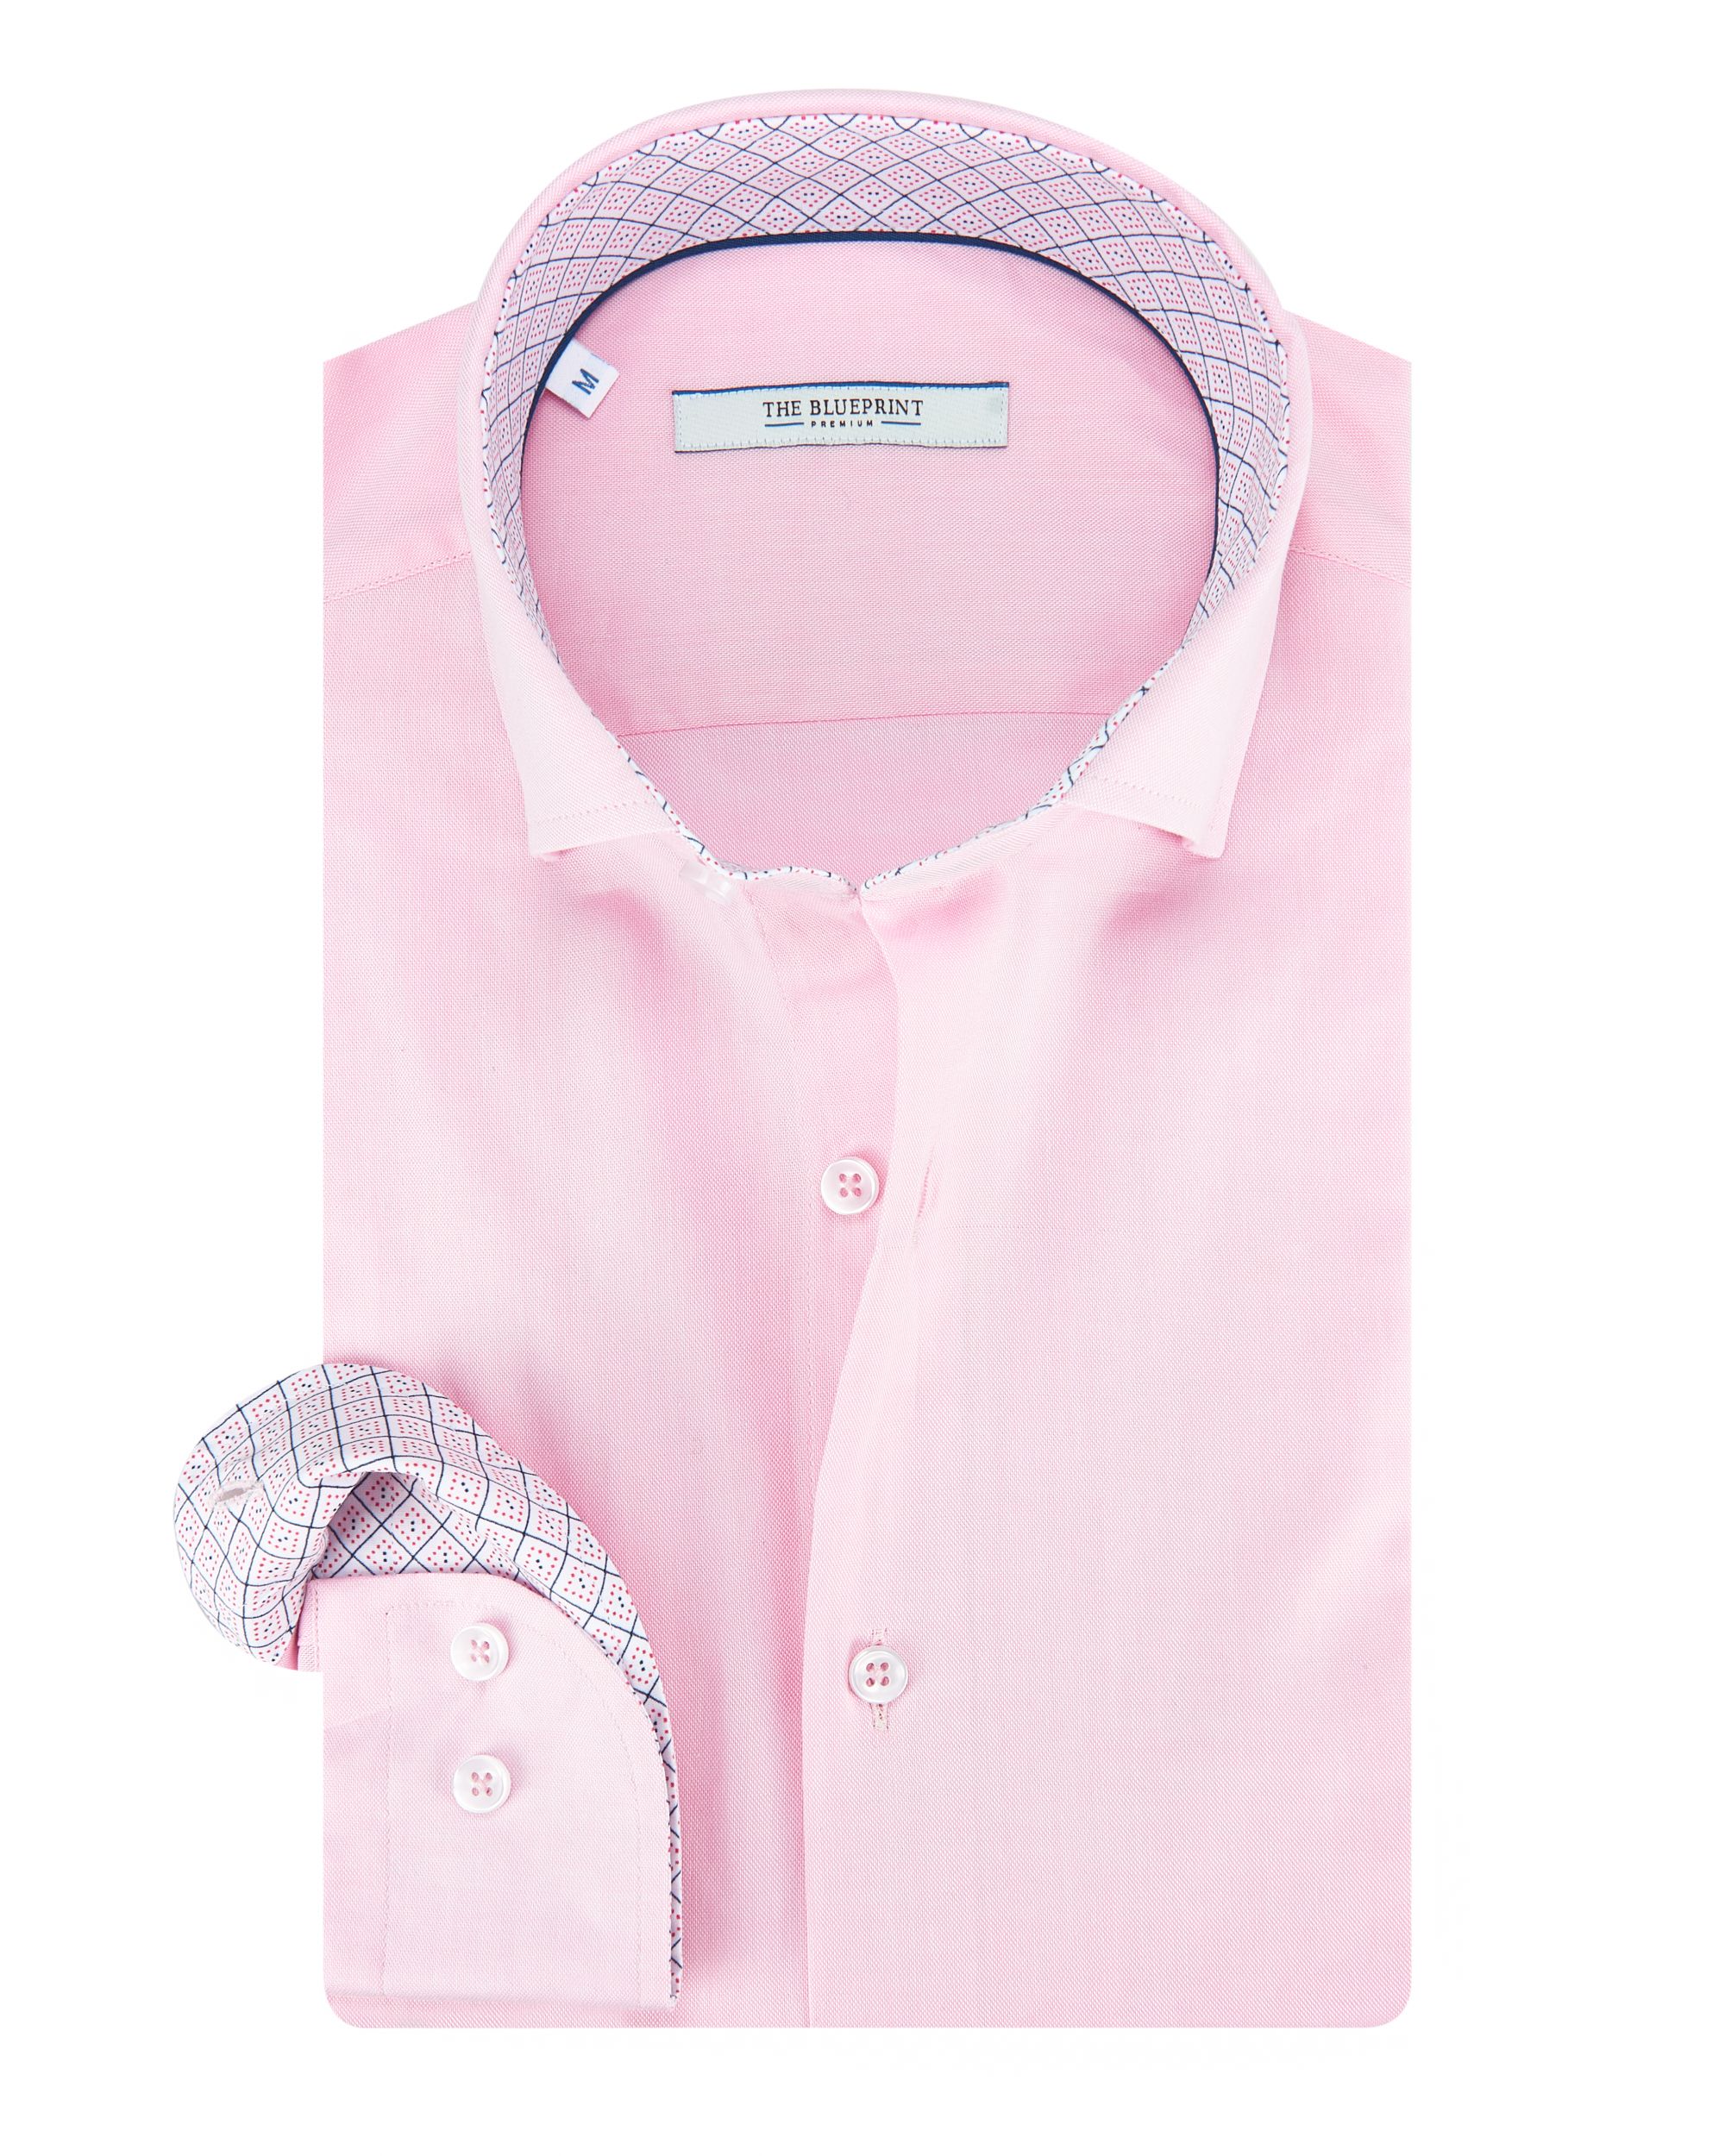 The BLUEPRINT Premium Trendy overhemd LM Roze uni 084499-001-L